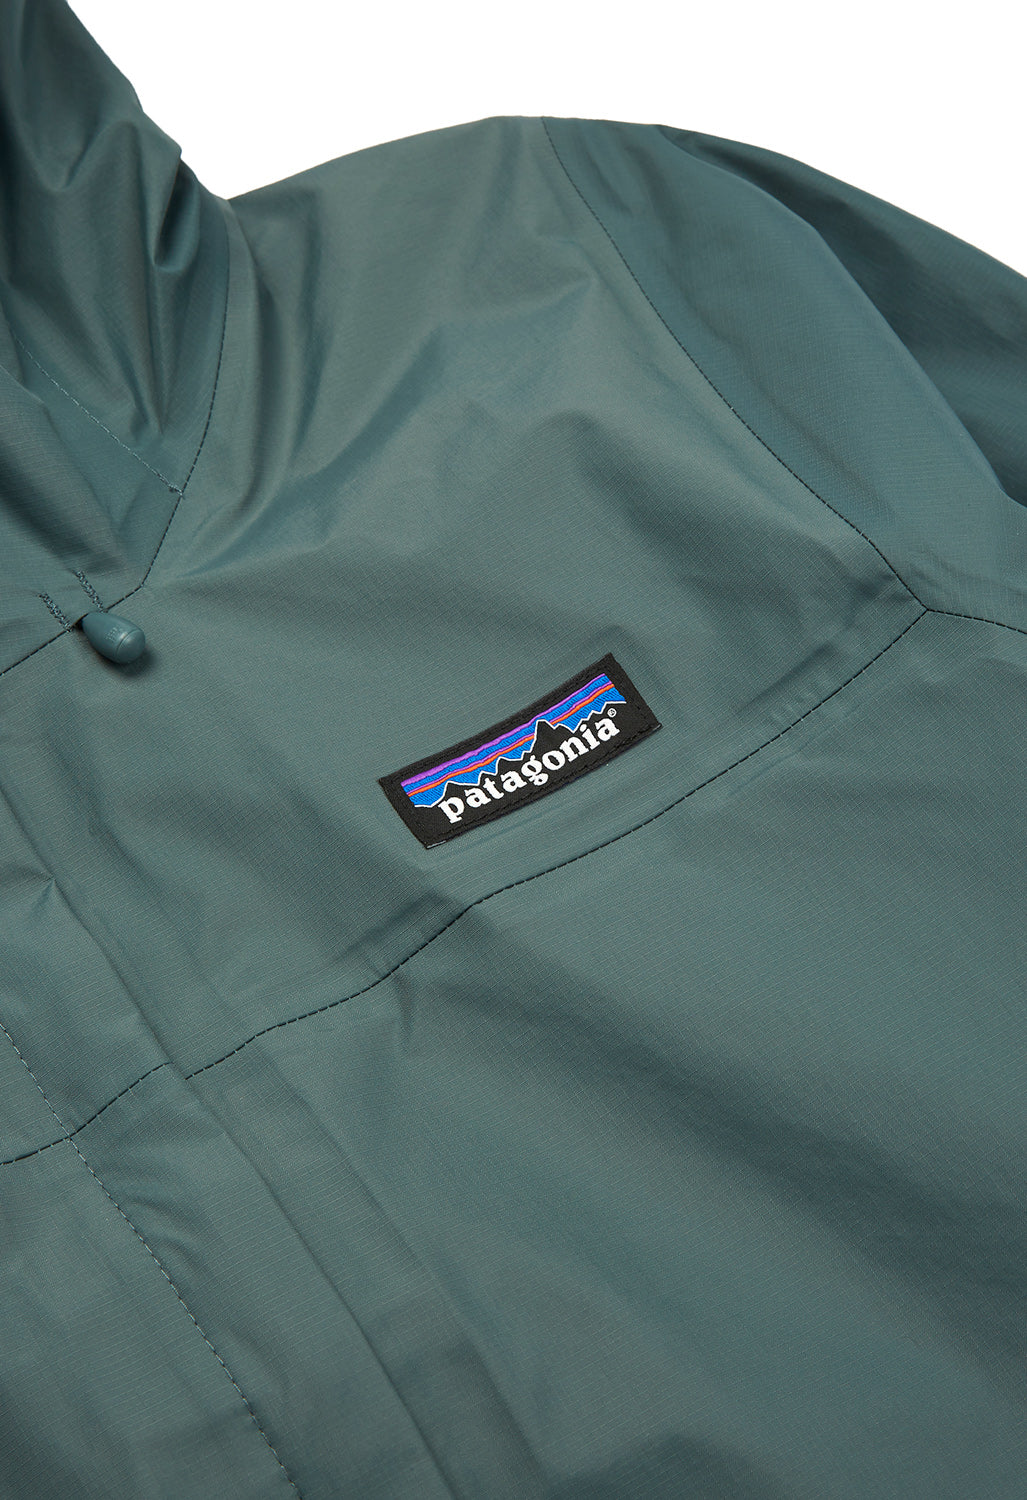 Patagonia Women's Torrentshell 3L Jacket - Nouveau Green